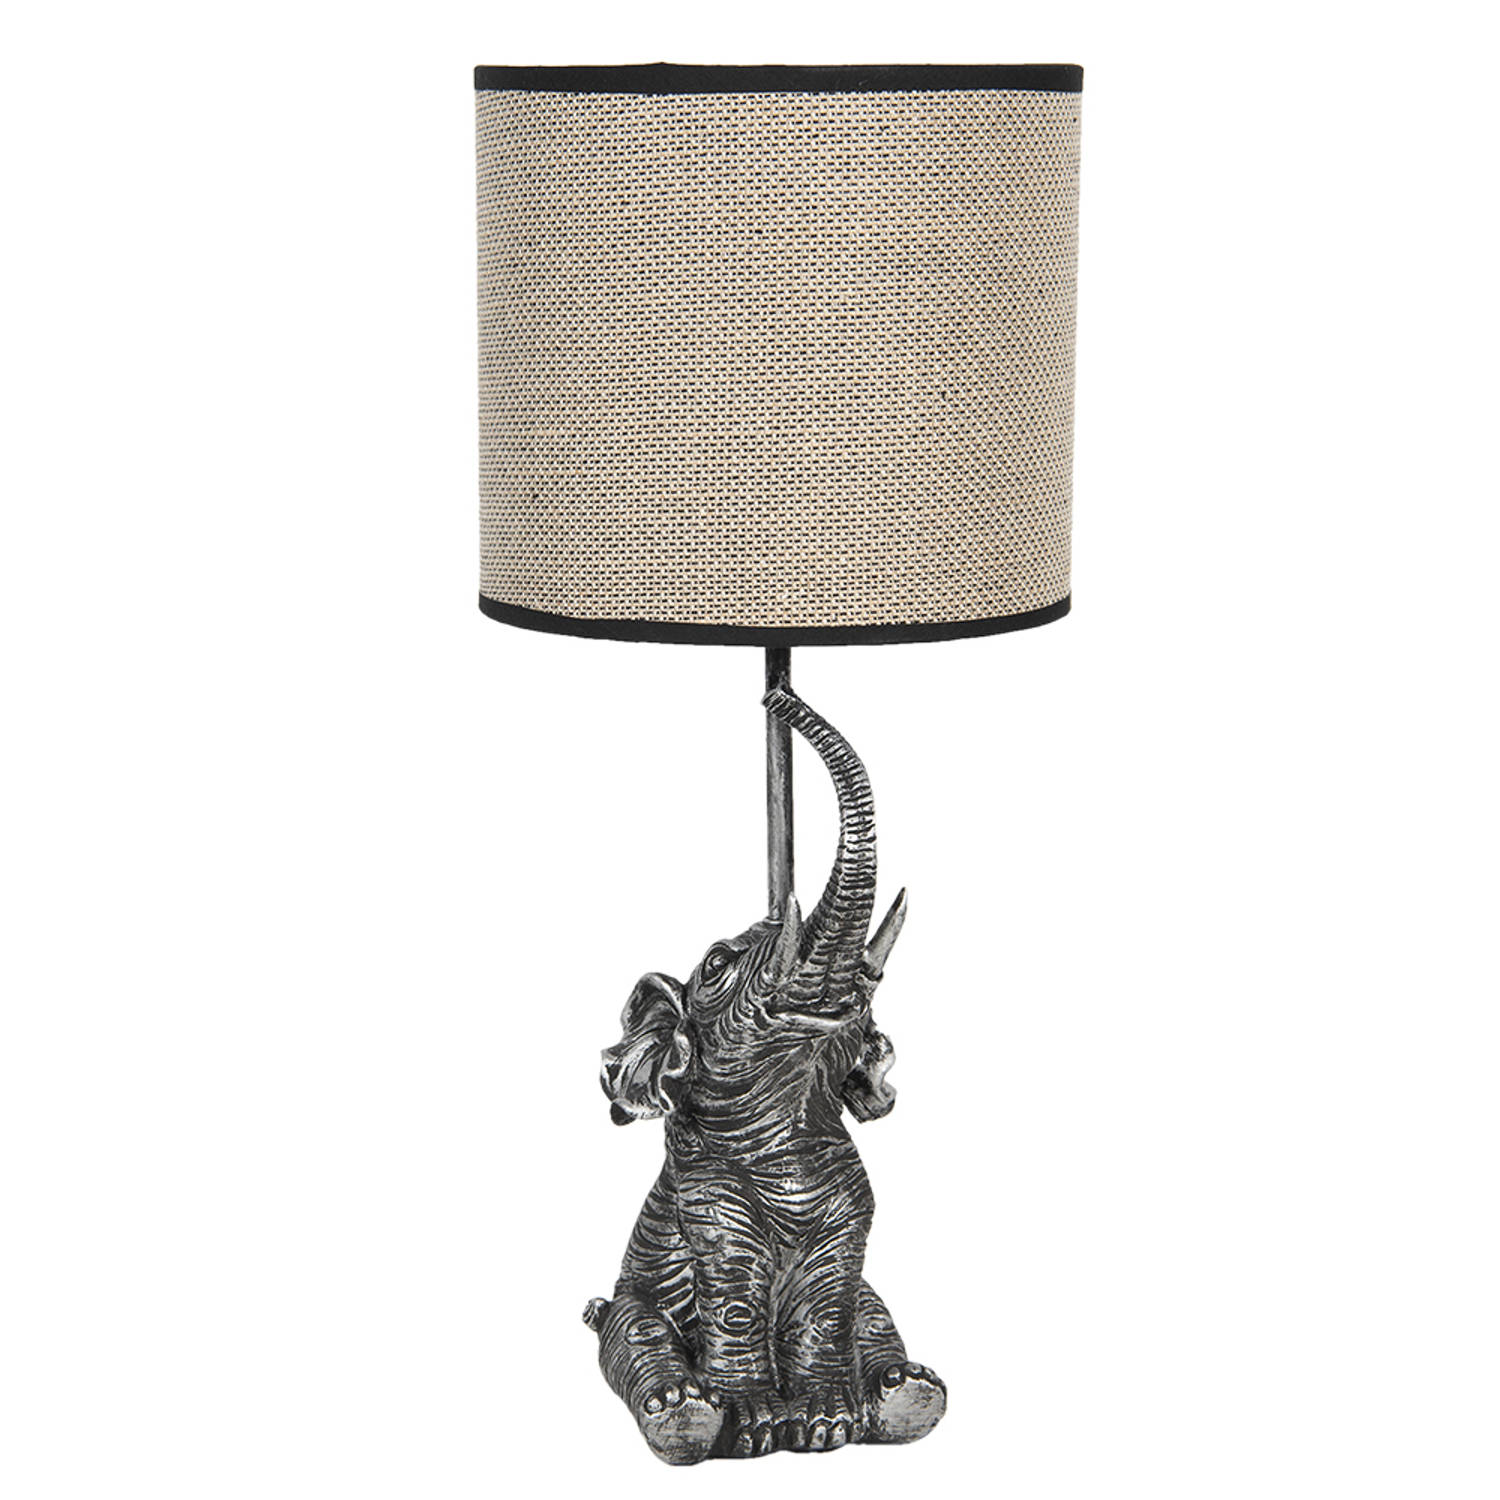 HAES DECO Tafellamp City Jungle Olifant Lamp, Ø 20x45 cm Beige-Grijs Bureaulamp, Sfeerlamp, Nachtlam